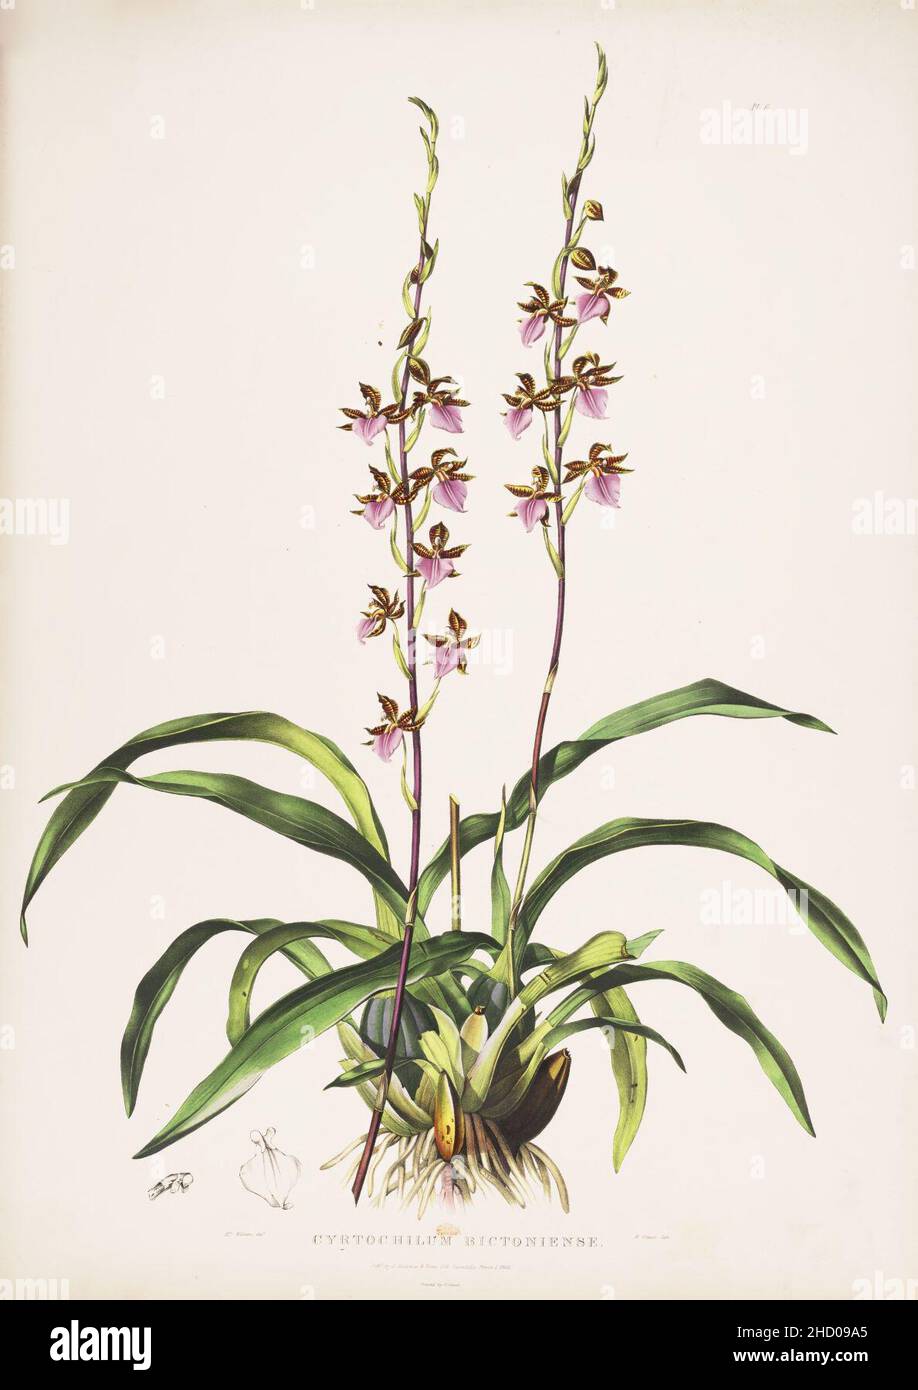 Rhynchostele bictoniensis (as Cyrtochilum bictoniense)-Bateman Orch. Mex. Guat. pl. 6 (1842). Stock Photo